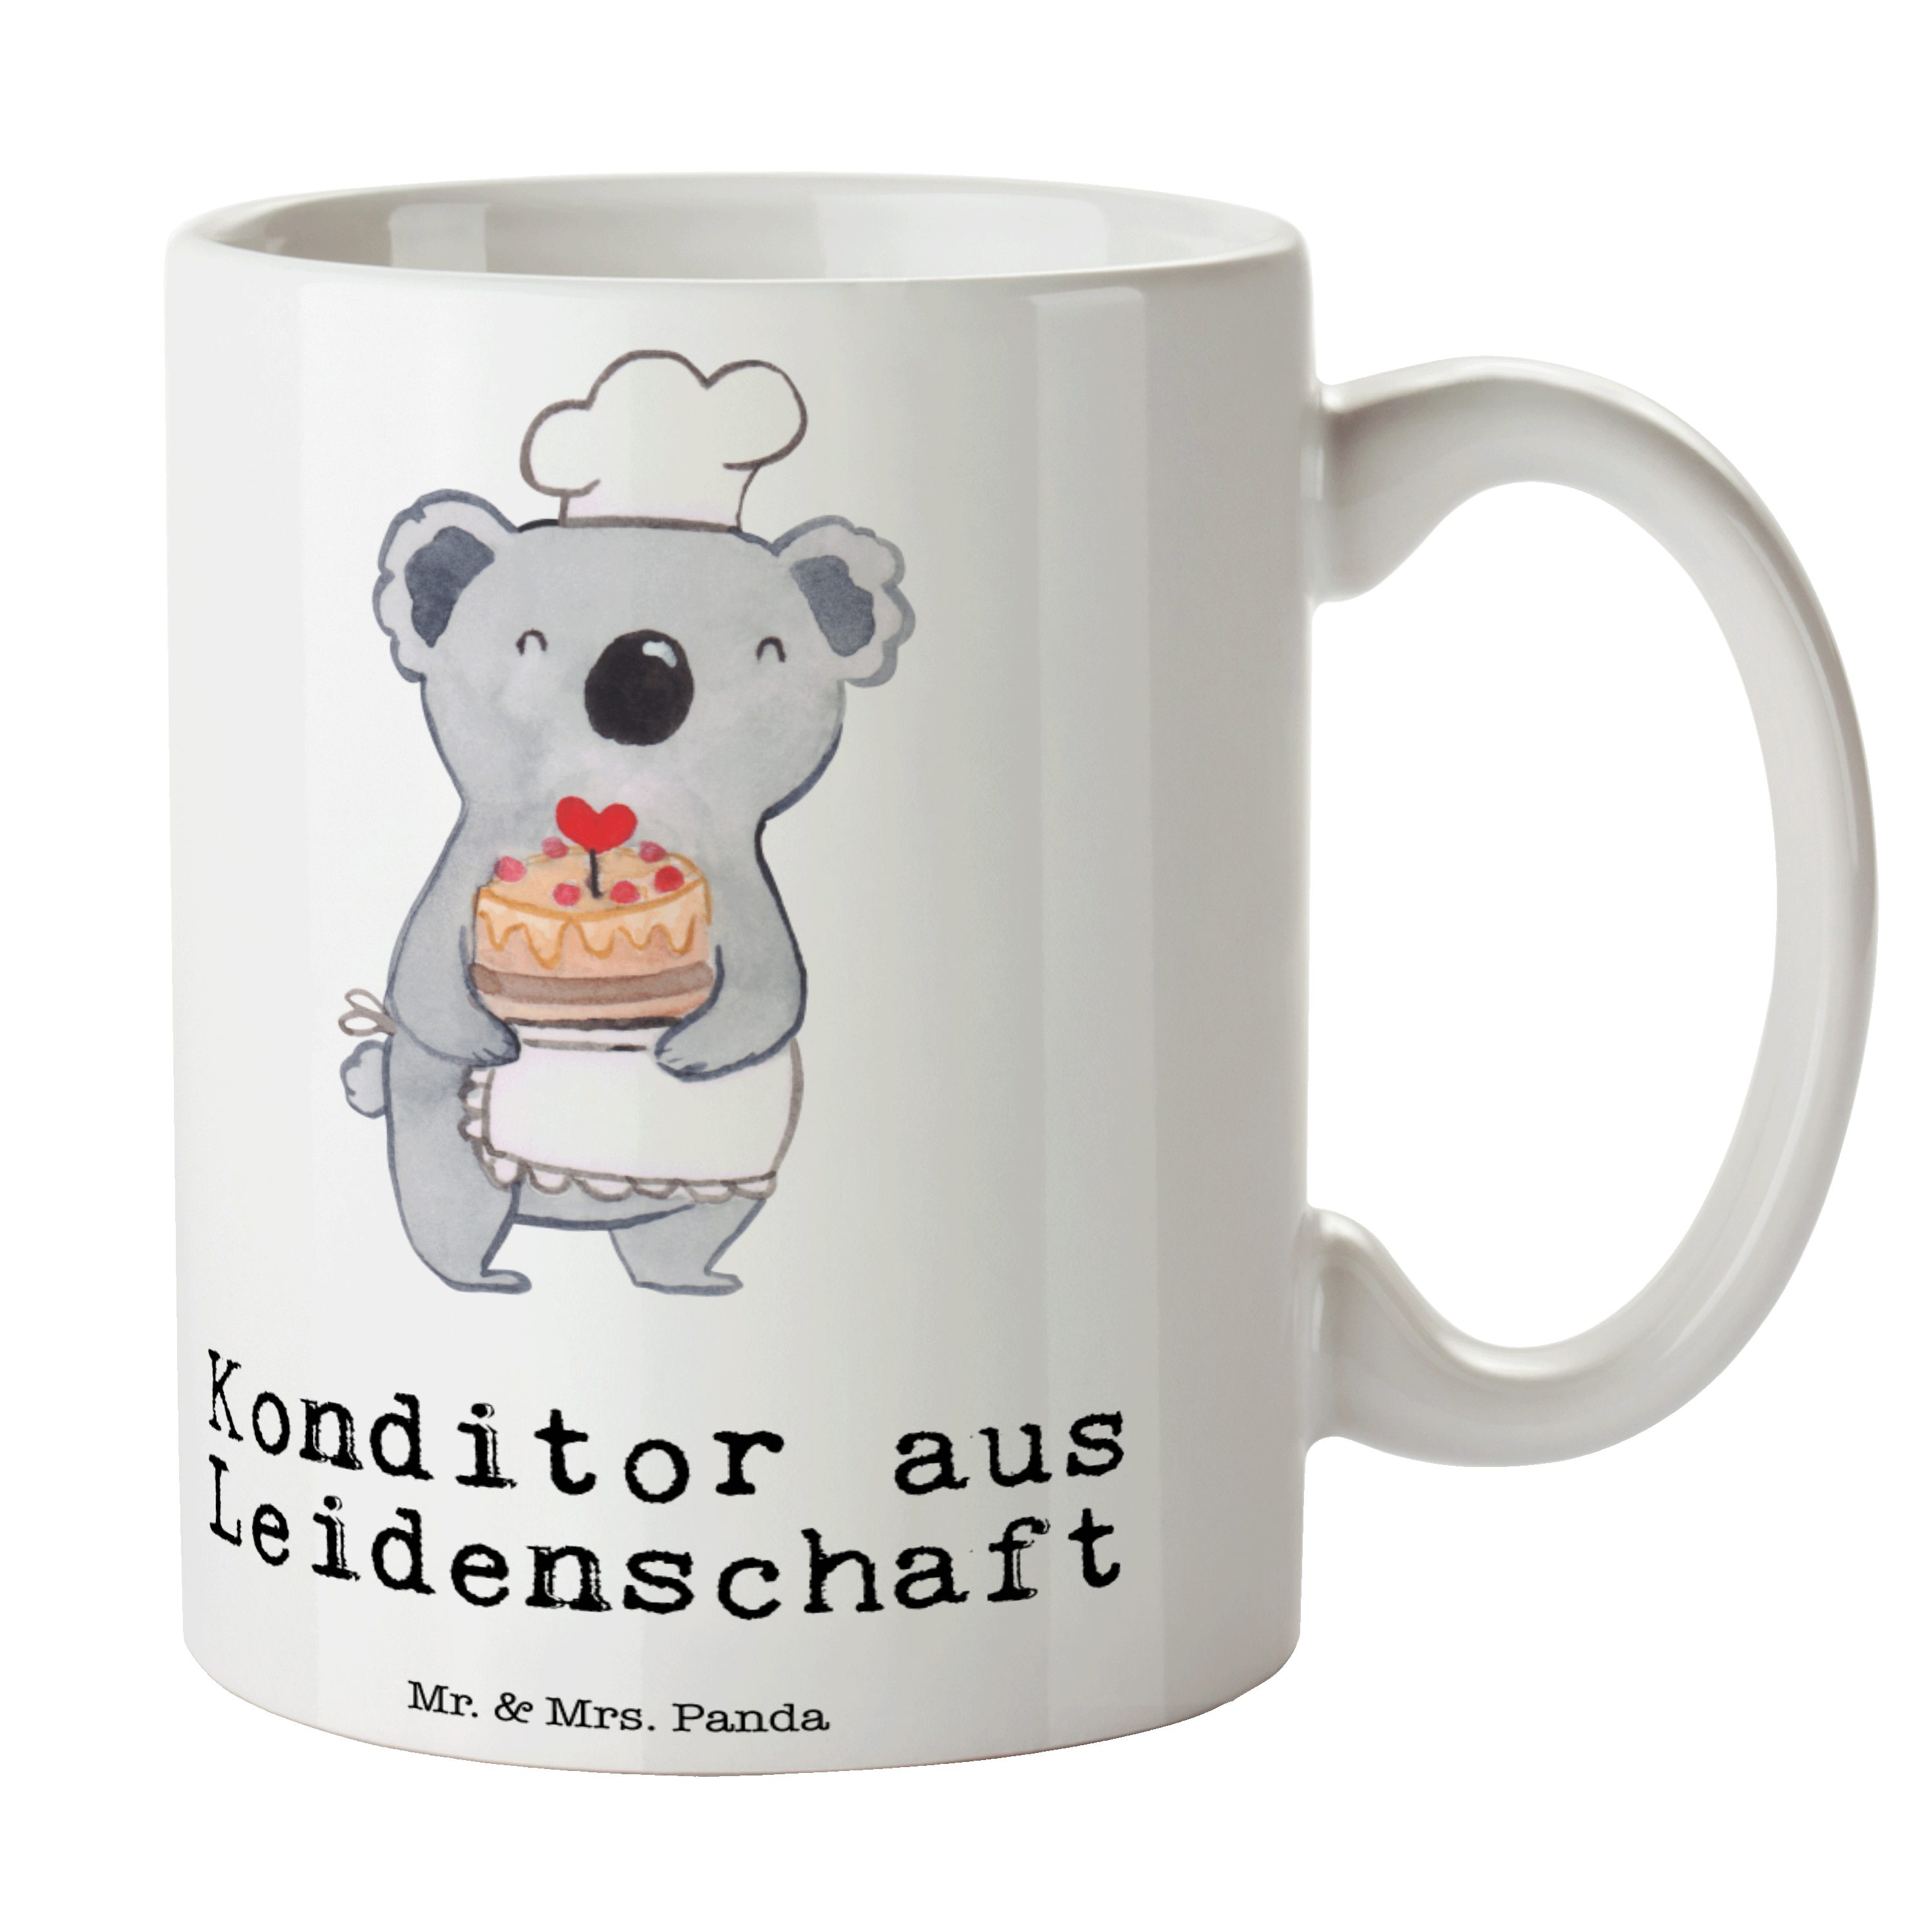 Mr. & Mrs. Panda Tasse Konditor aus Leidenschaft - Weiß - Geschenk, Dankeschön, Kuchenbäcker, Keramik